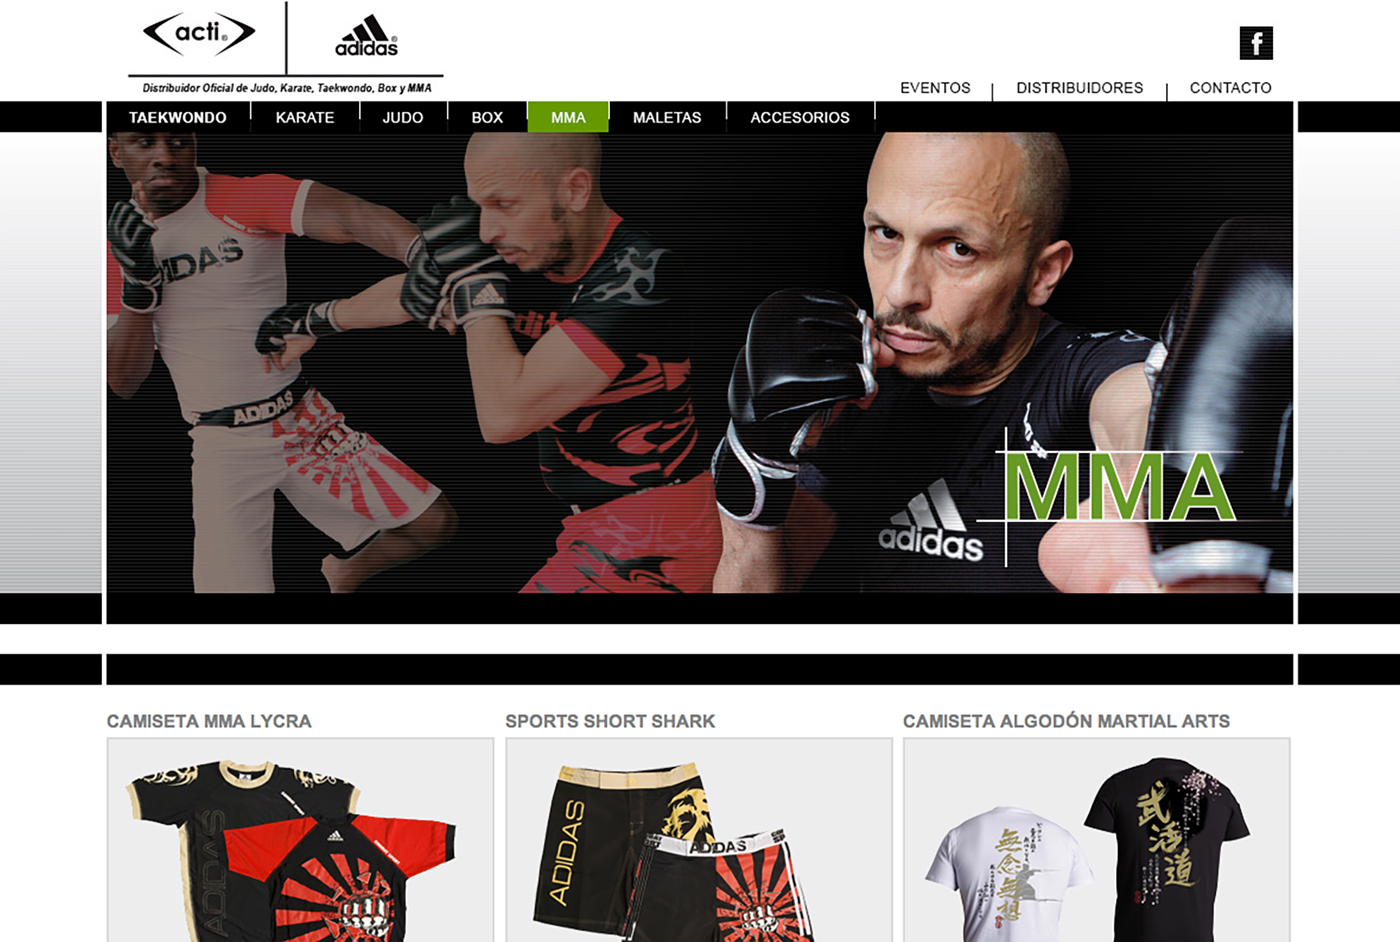 Adidas-website-mma